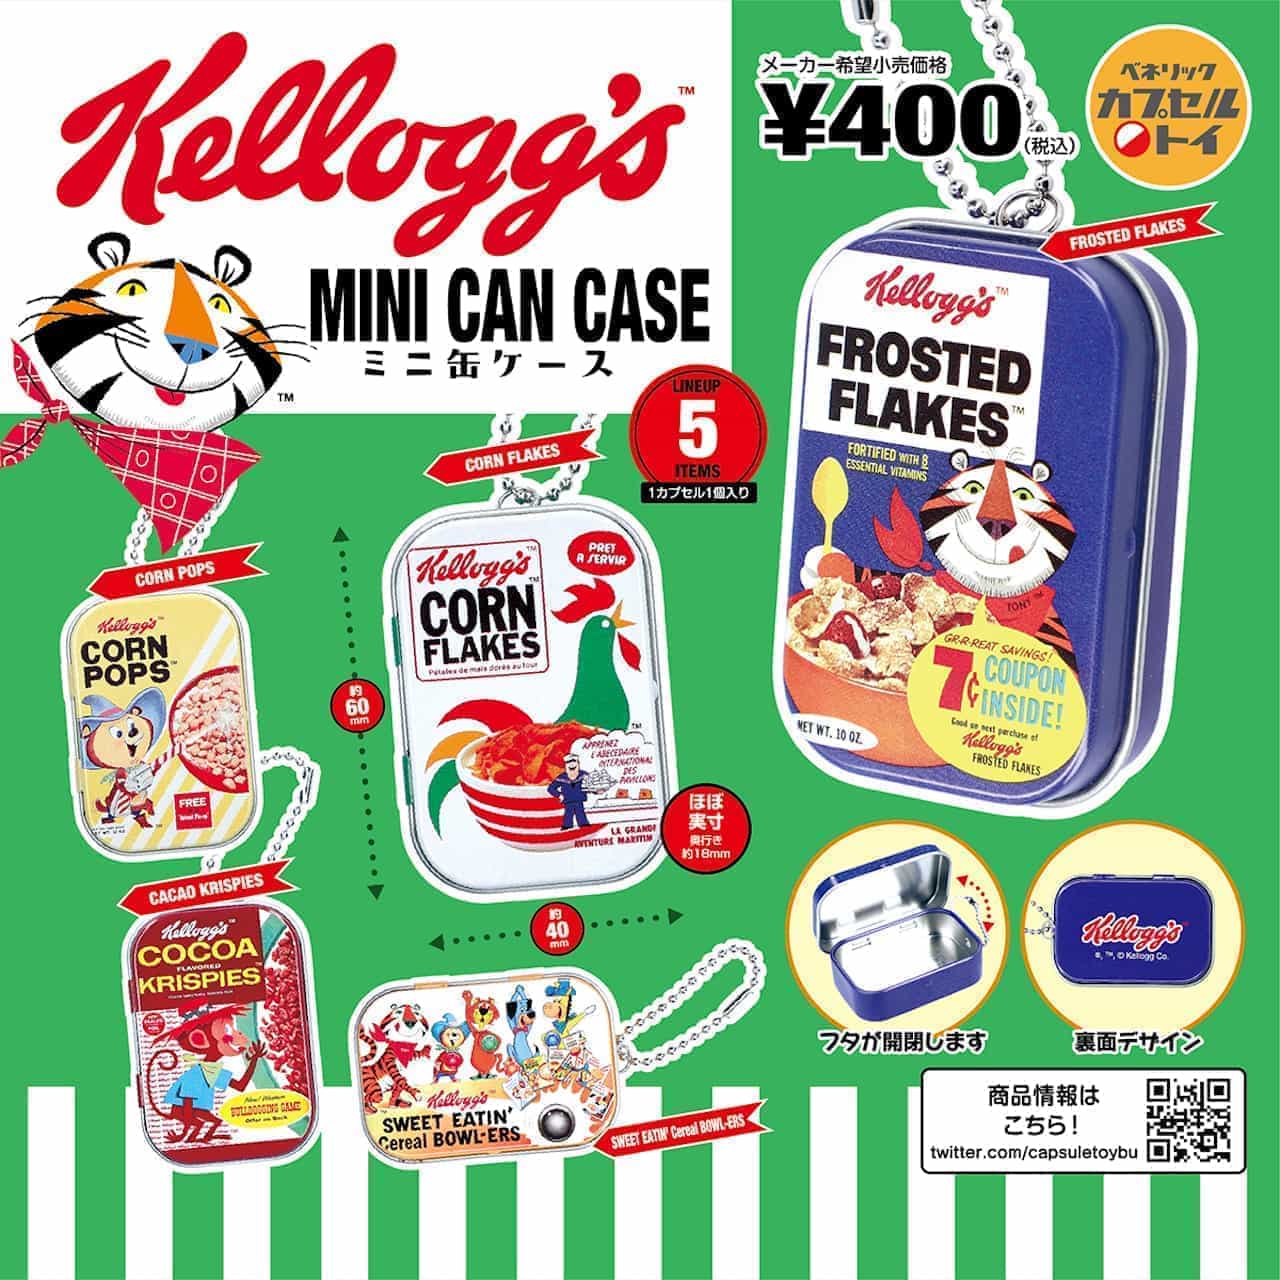 Capsule Toy "Kellogg's Mini Can Case